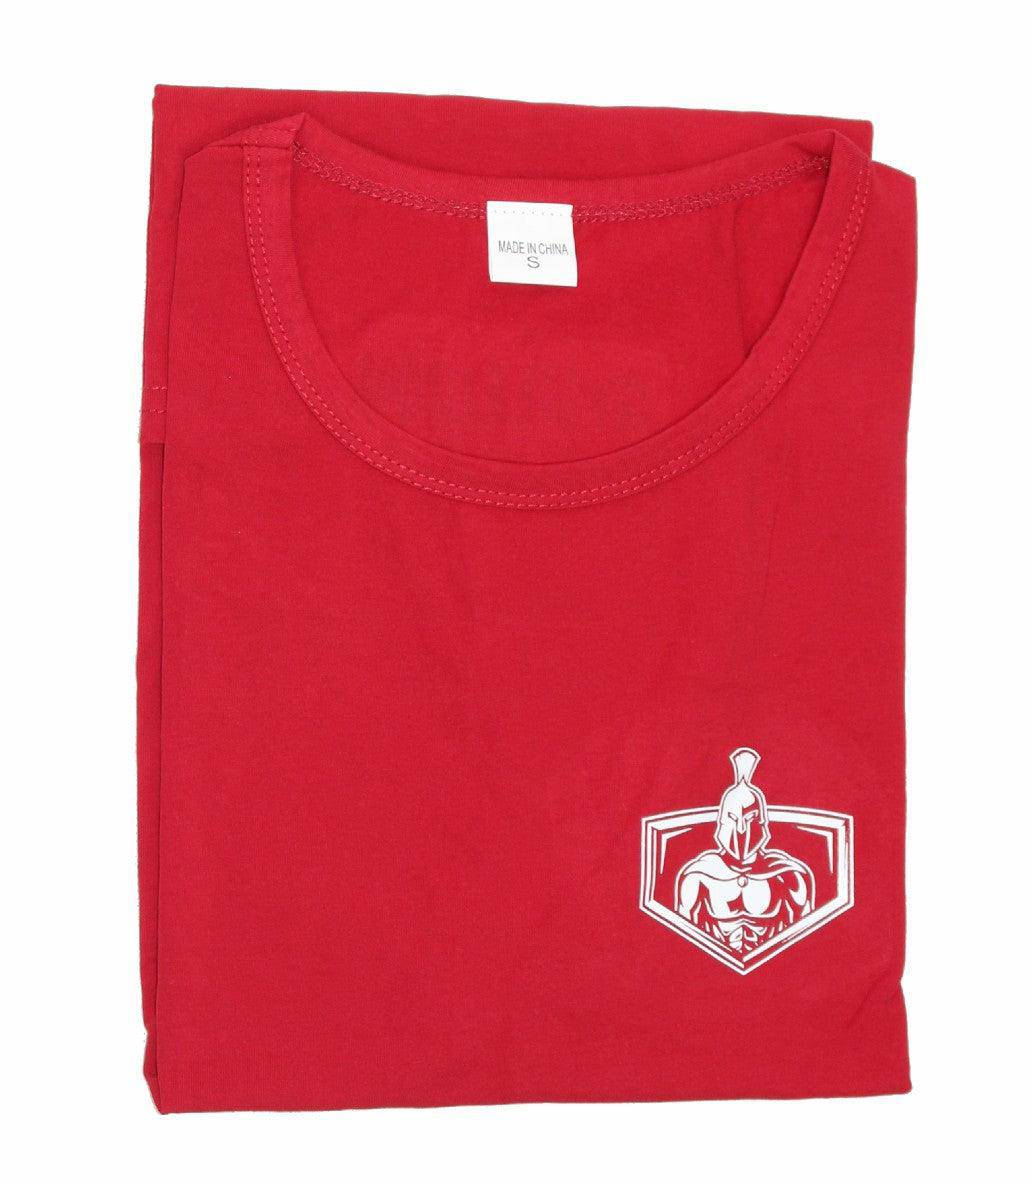 Arrival T-shirt - Rood - Gymlegion